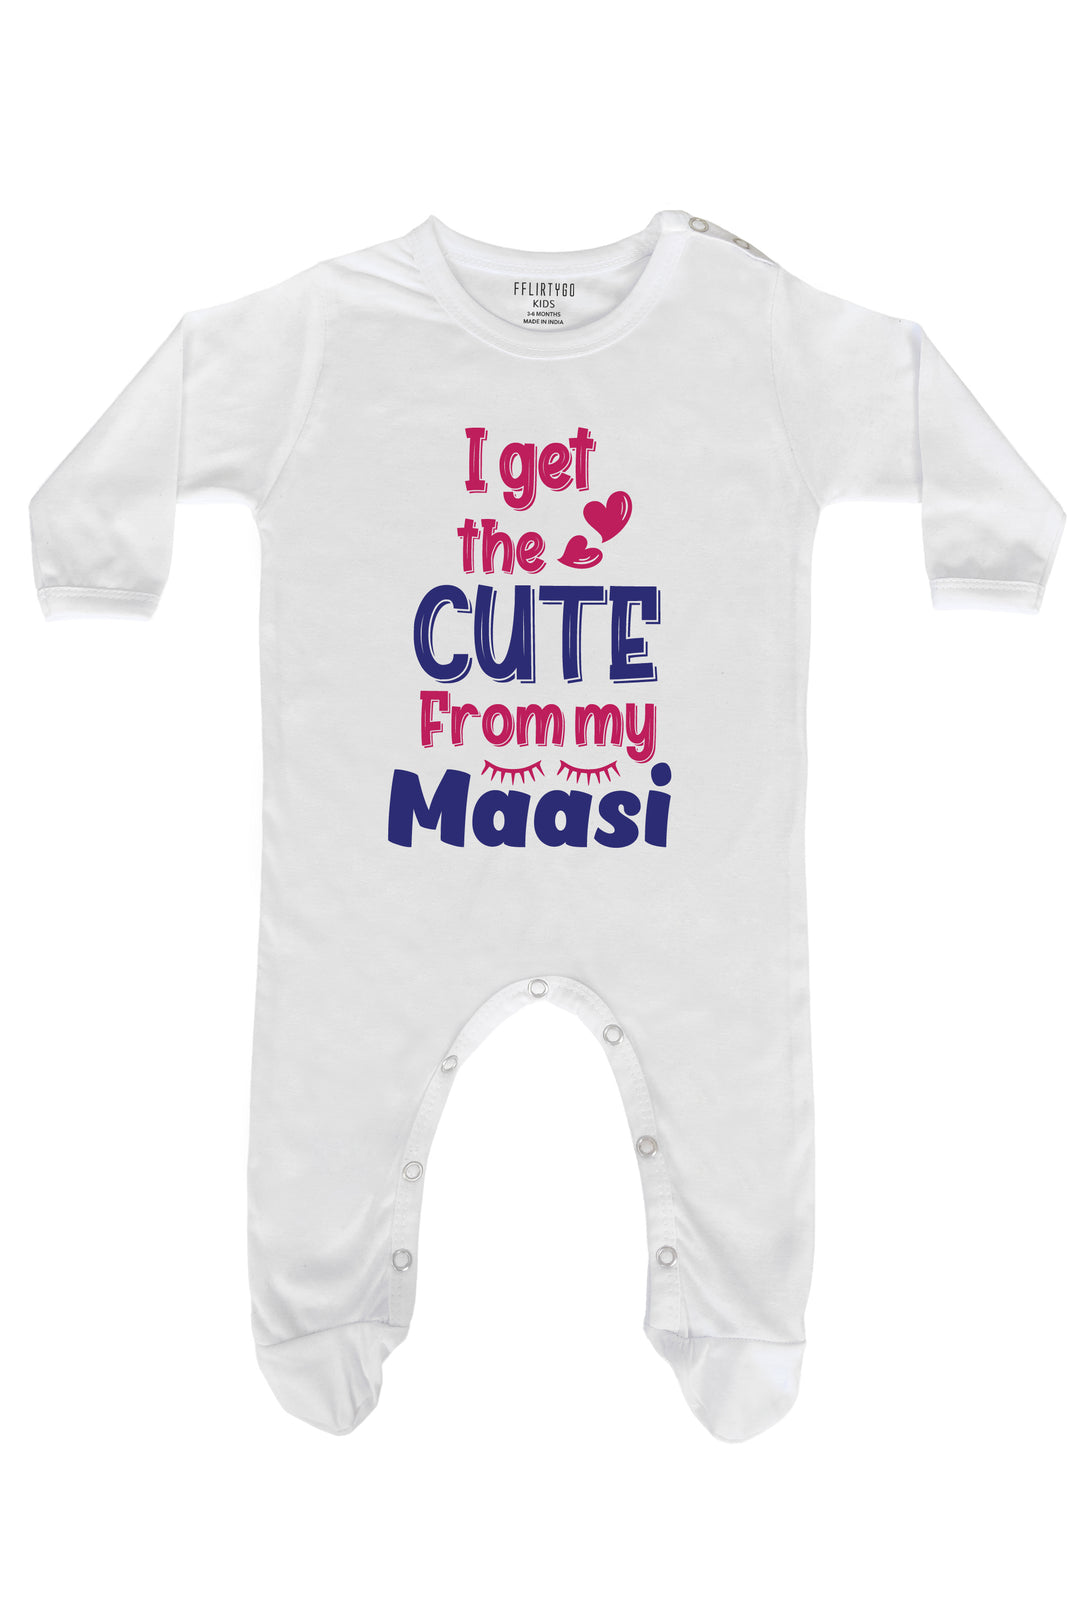 I Get The Cute From My Maasi Baby Romper | Onesies